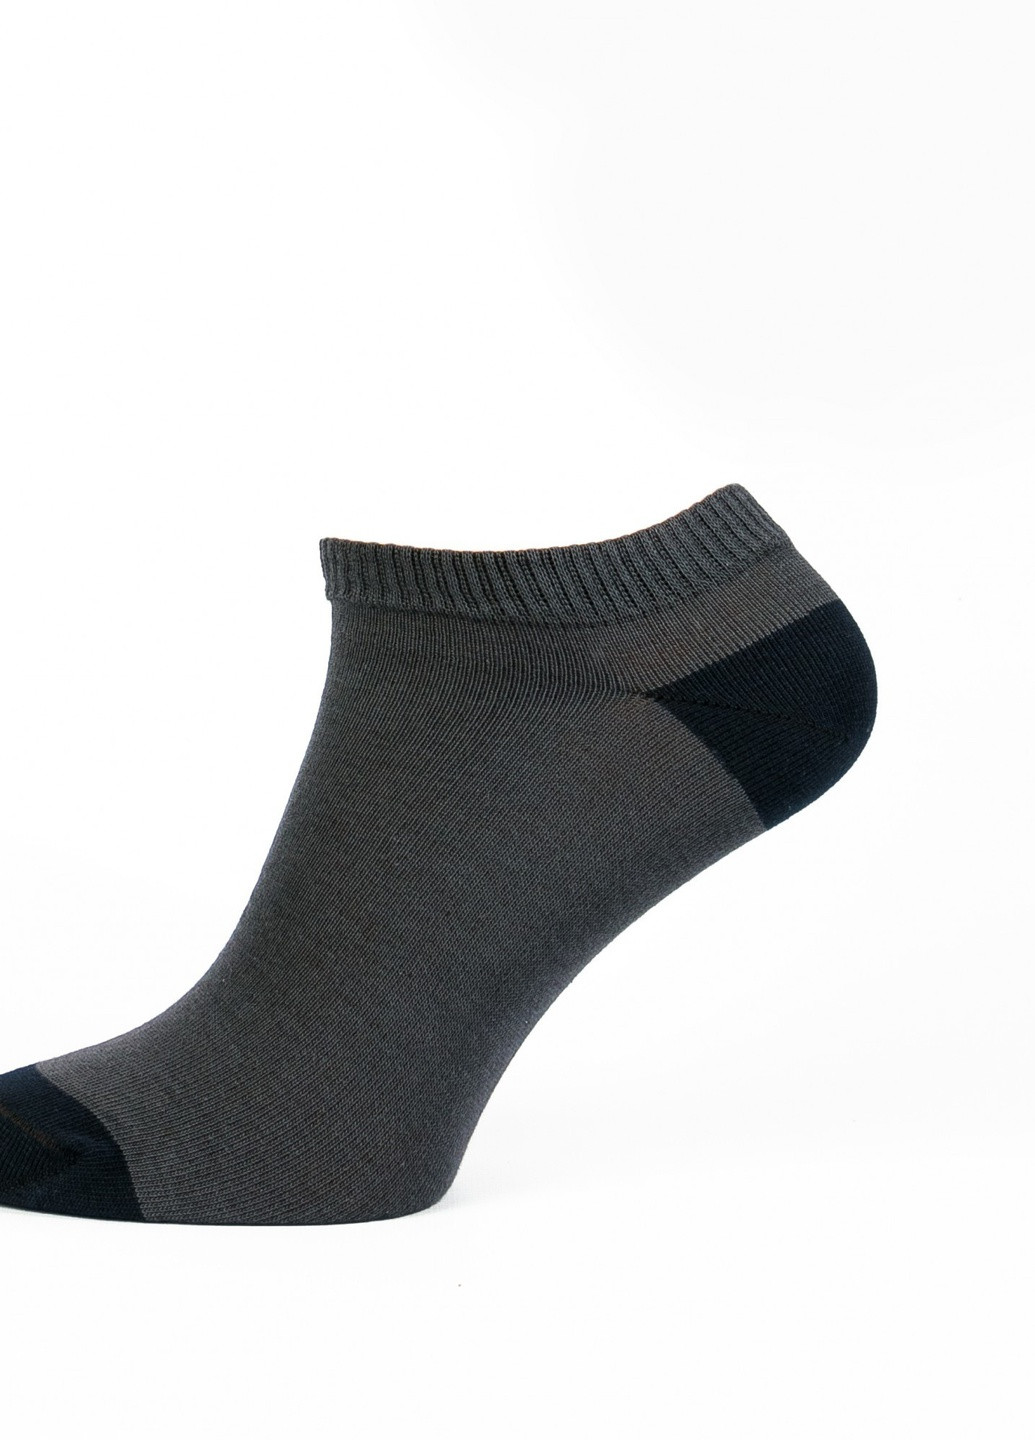 Шкарпетки чоловічі ТМ "Нова пара" 471 НОВА ПАРА укорочена висота (257108326)